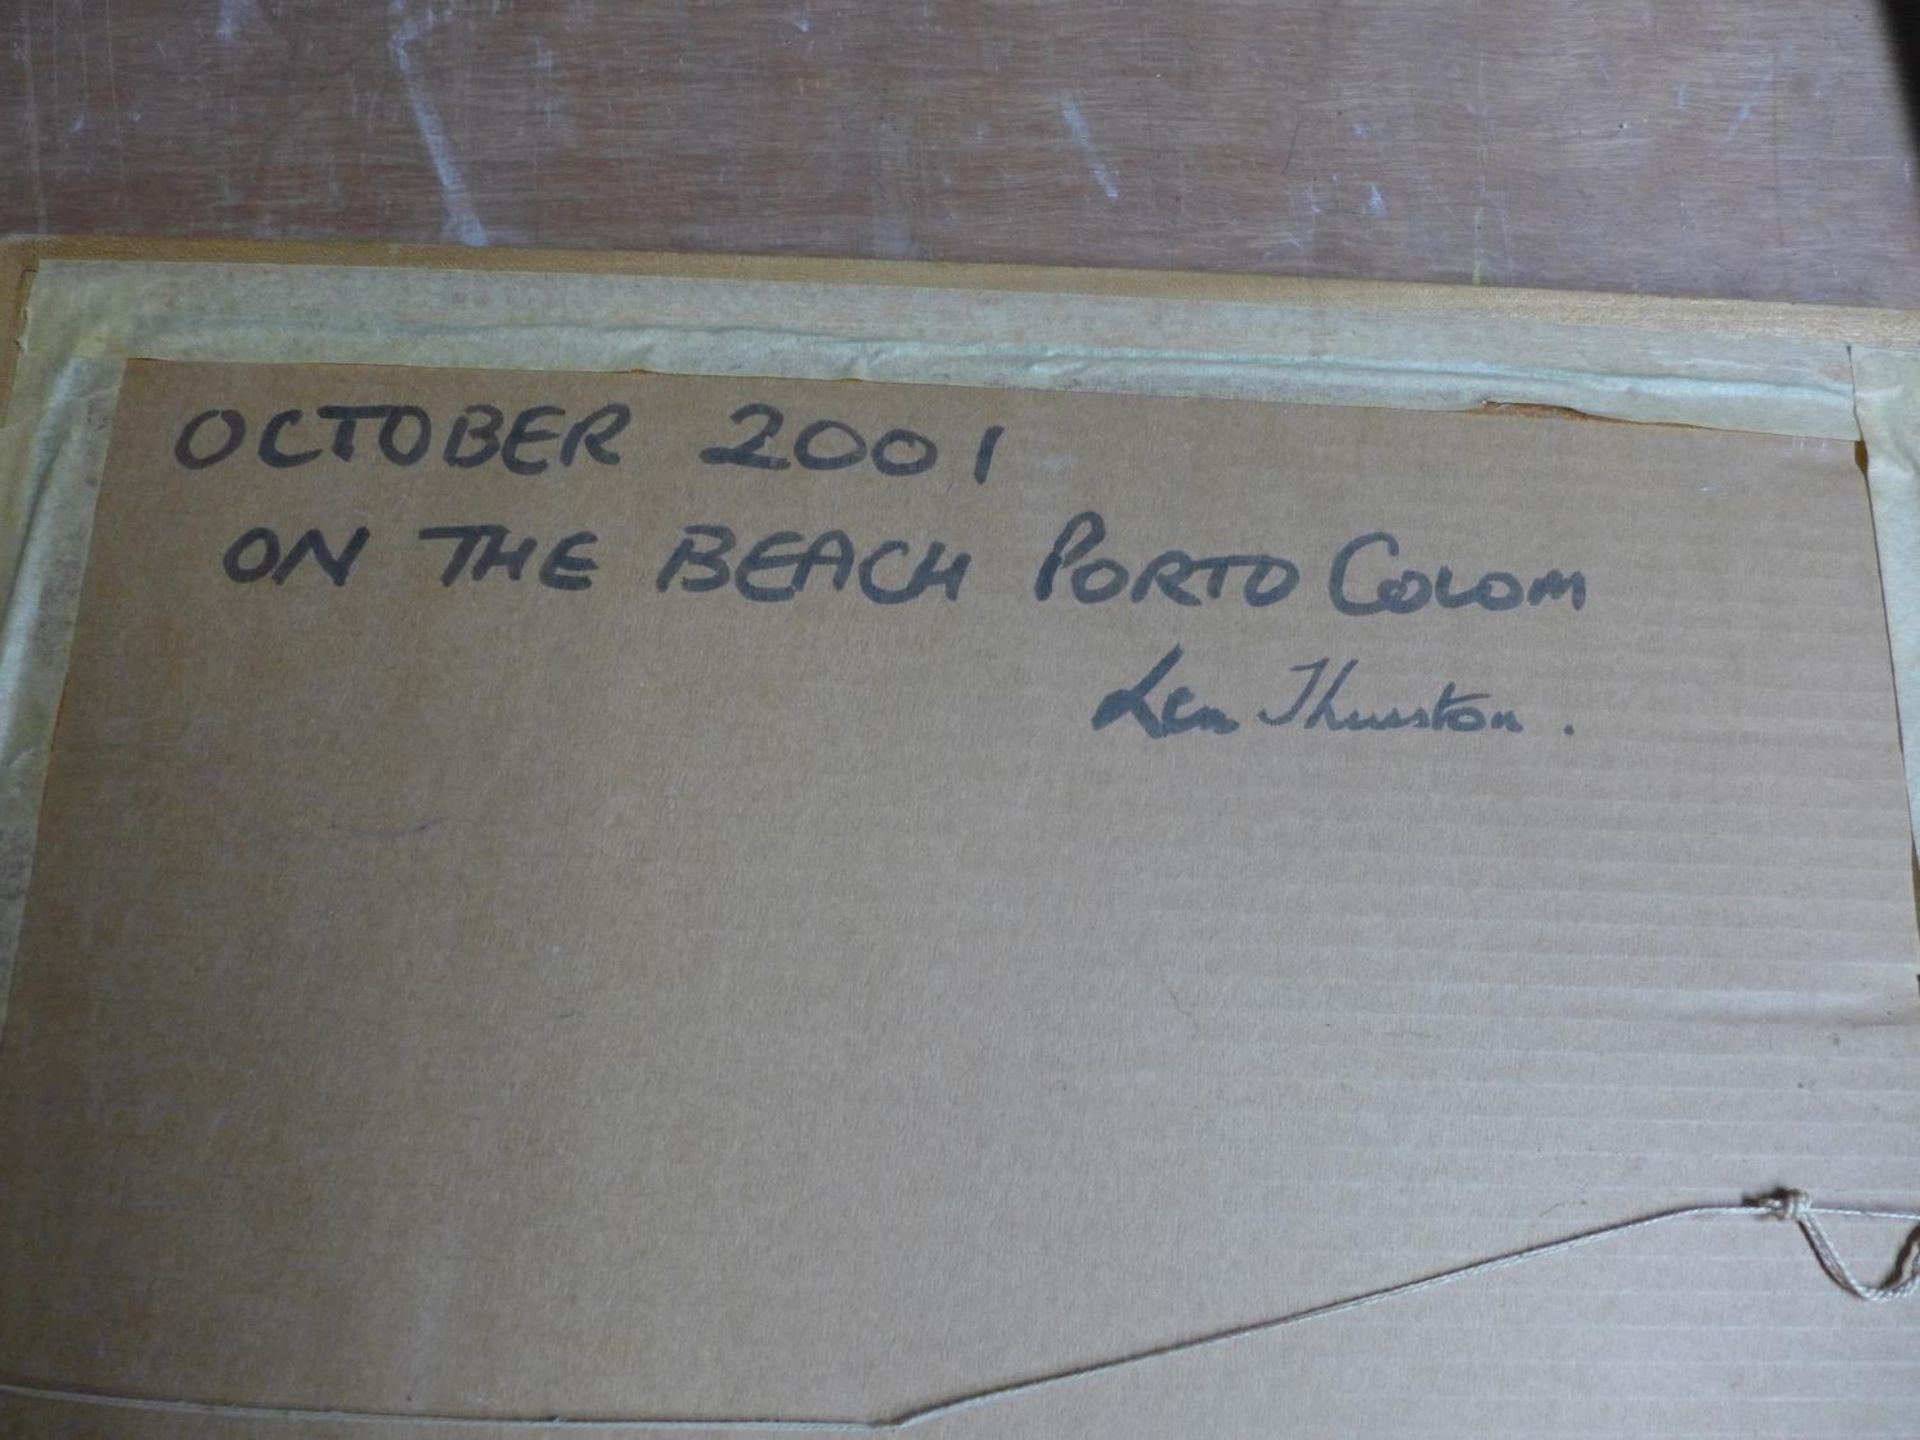 LEN THURSTON (BRITISH 1934-2015) ON THE BEACH PORTO COLOM, OIL ON PANEL, SIGNED LOWER RIGHT, TITLE - Bild 4 aus 4